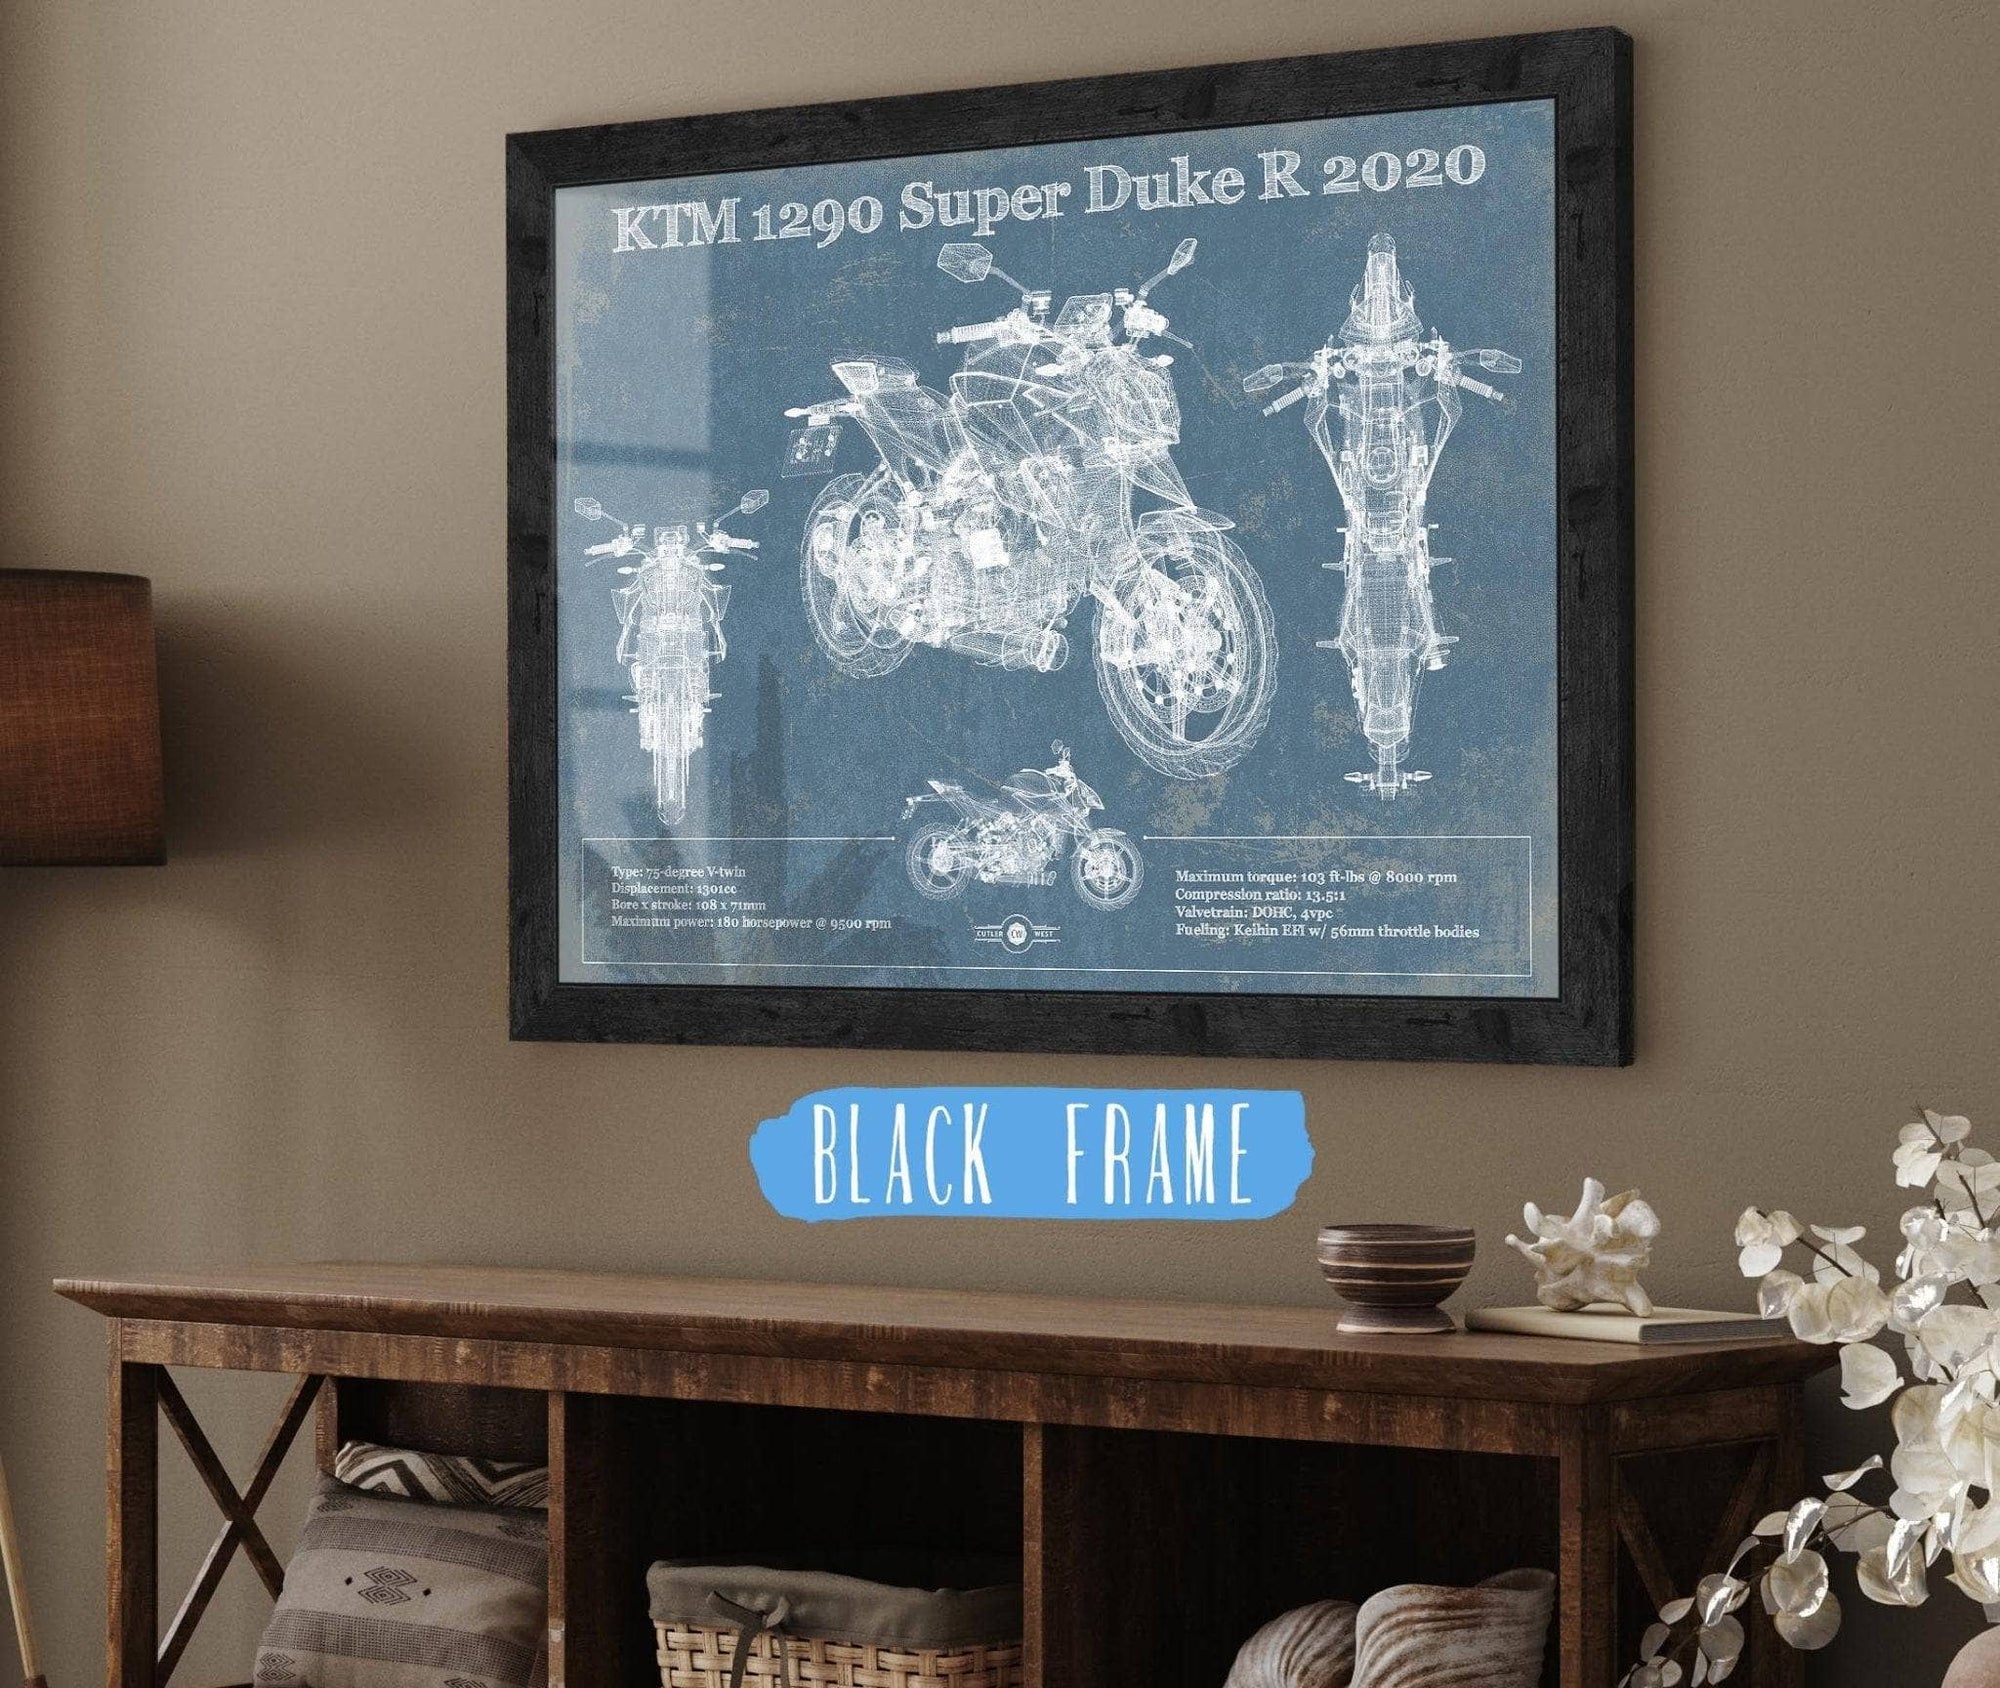 Cutler West 14" x 11" / Black Frame 2020 KTM 1290 Super Duke R Motorcycle Patent Print 845000242_8642